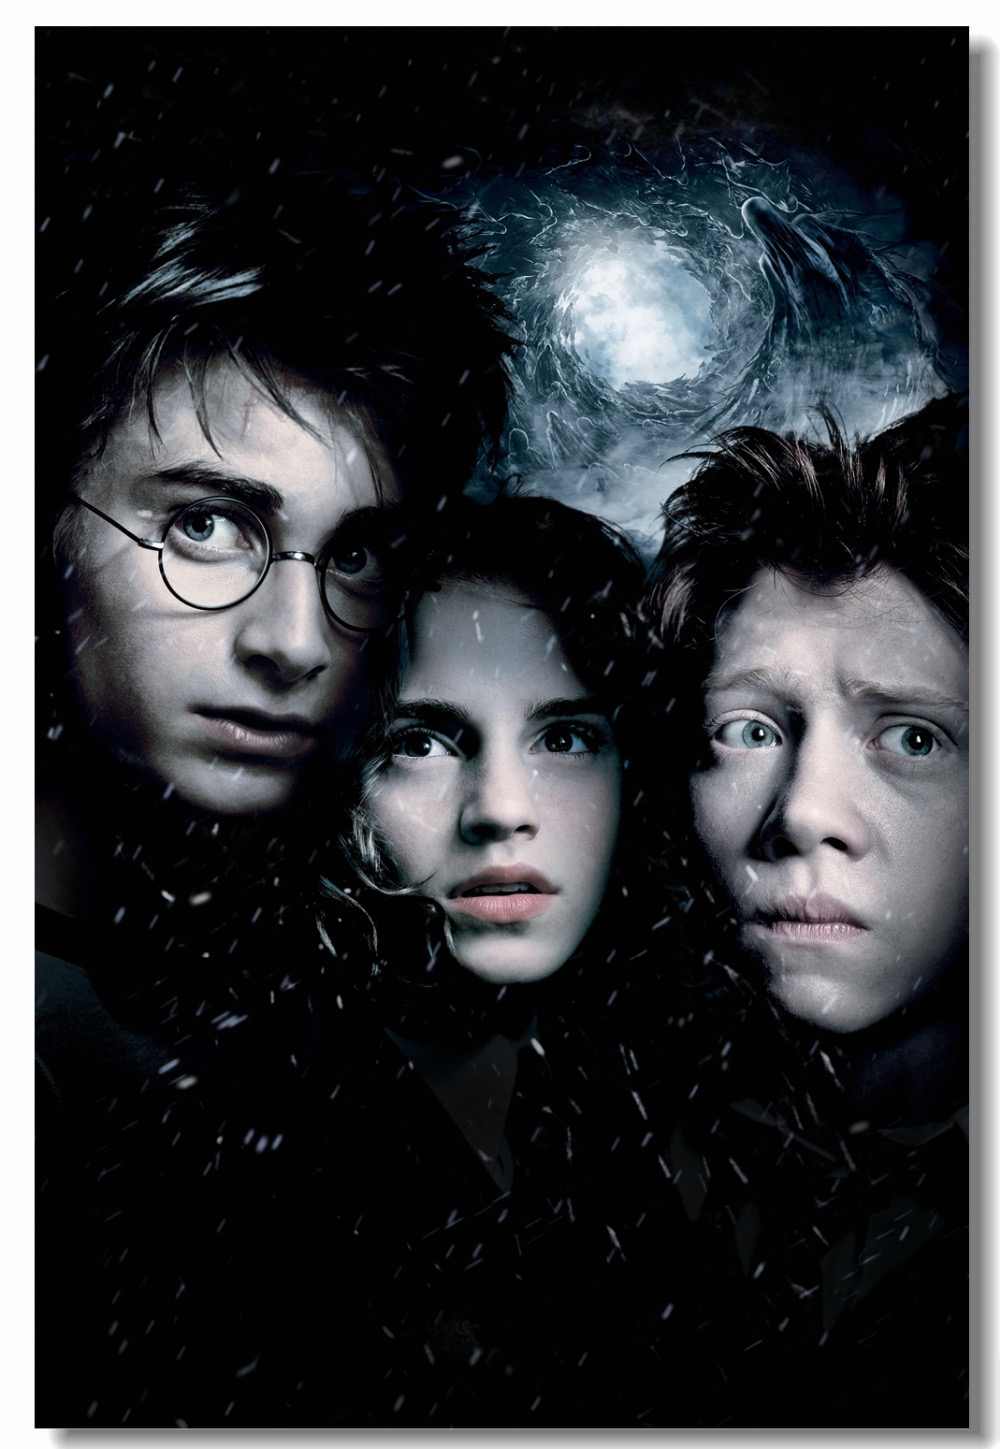 Custom Canvas Wall Decal Harry Potter Sirius Black Poster Wizard David Thewlis Stickers The Prisoner Of Azkaban Wallpaper #